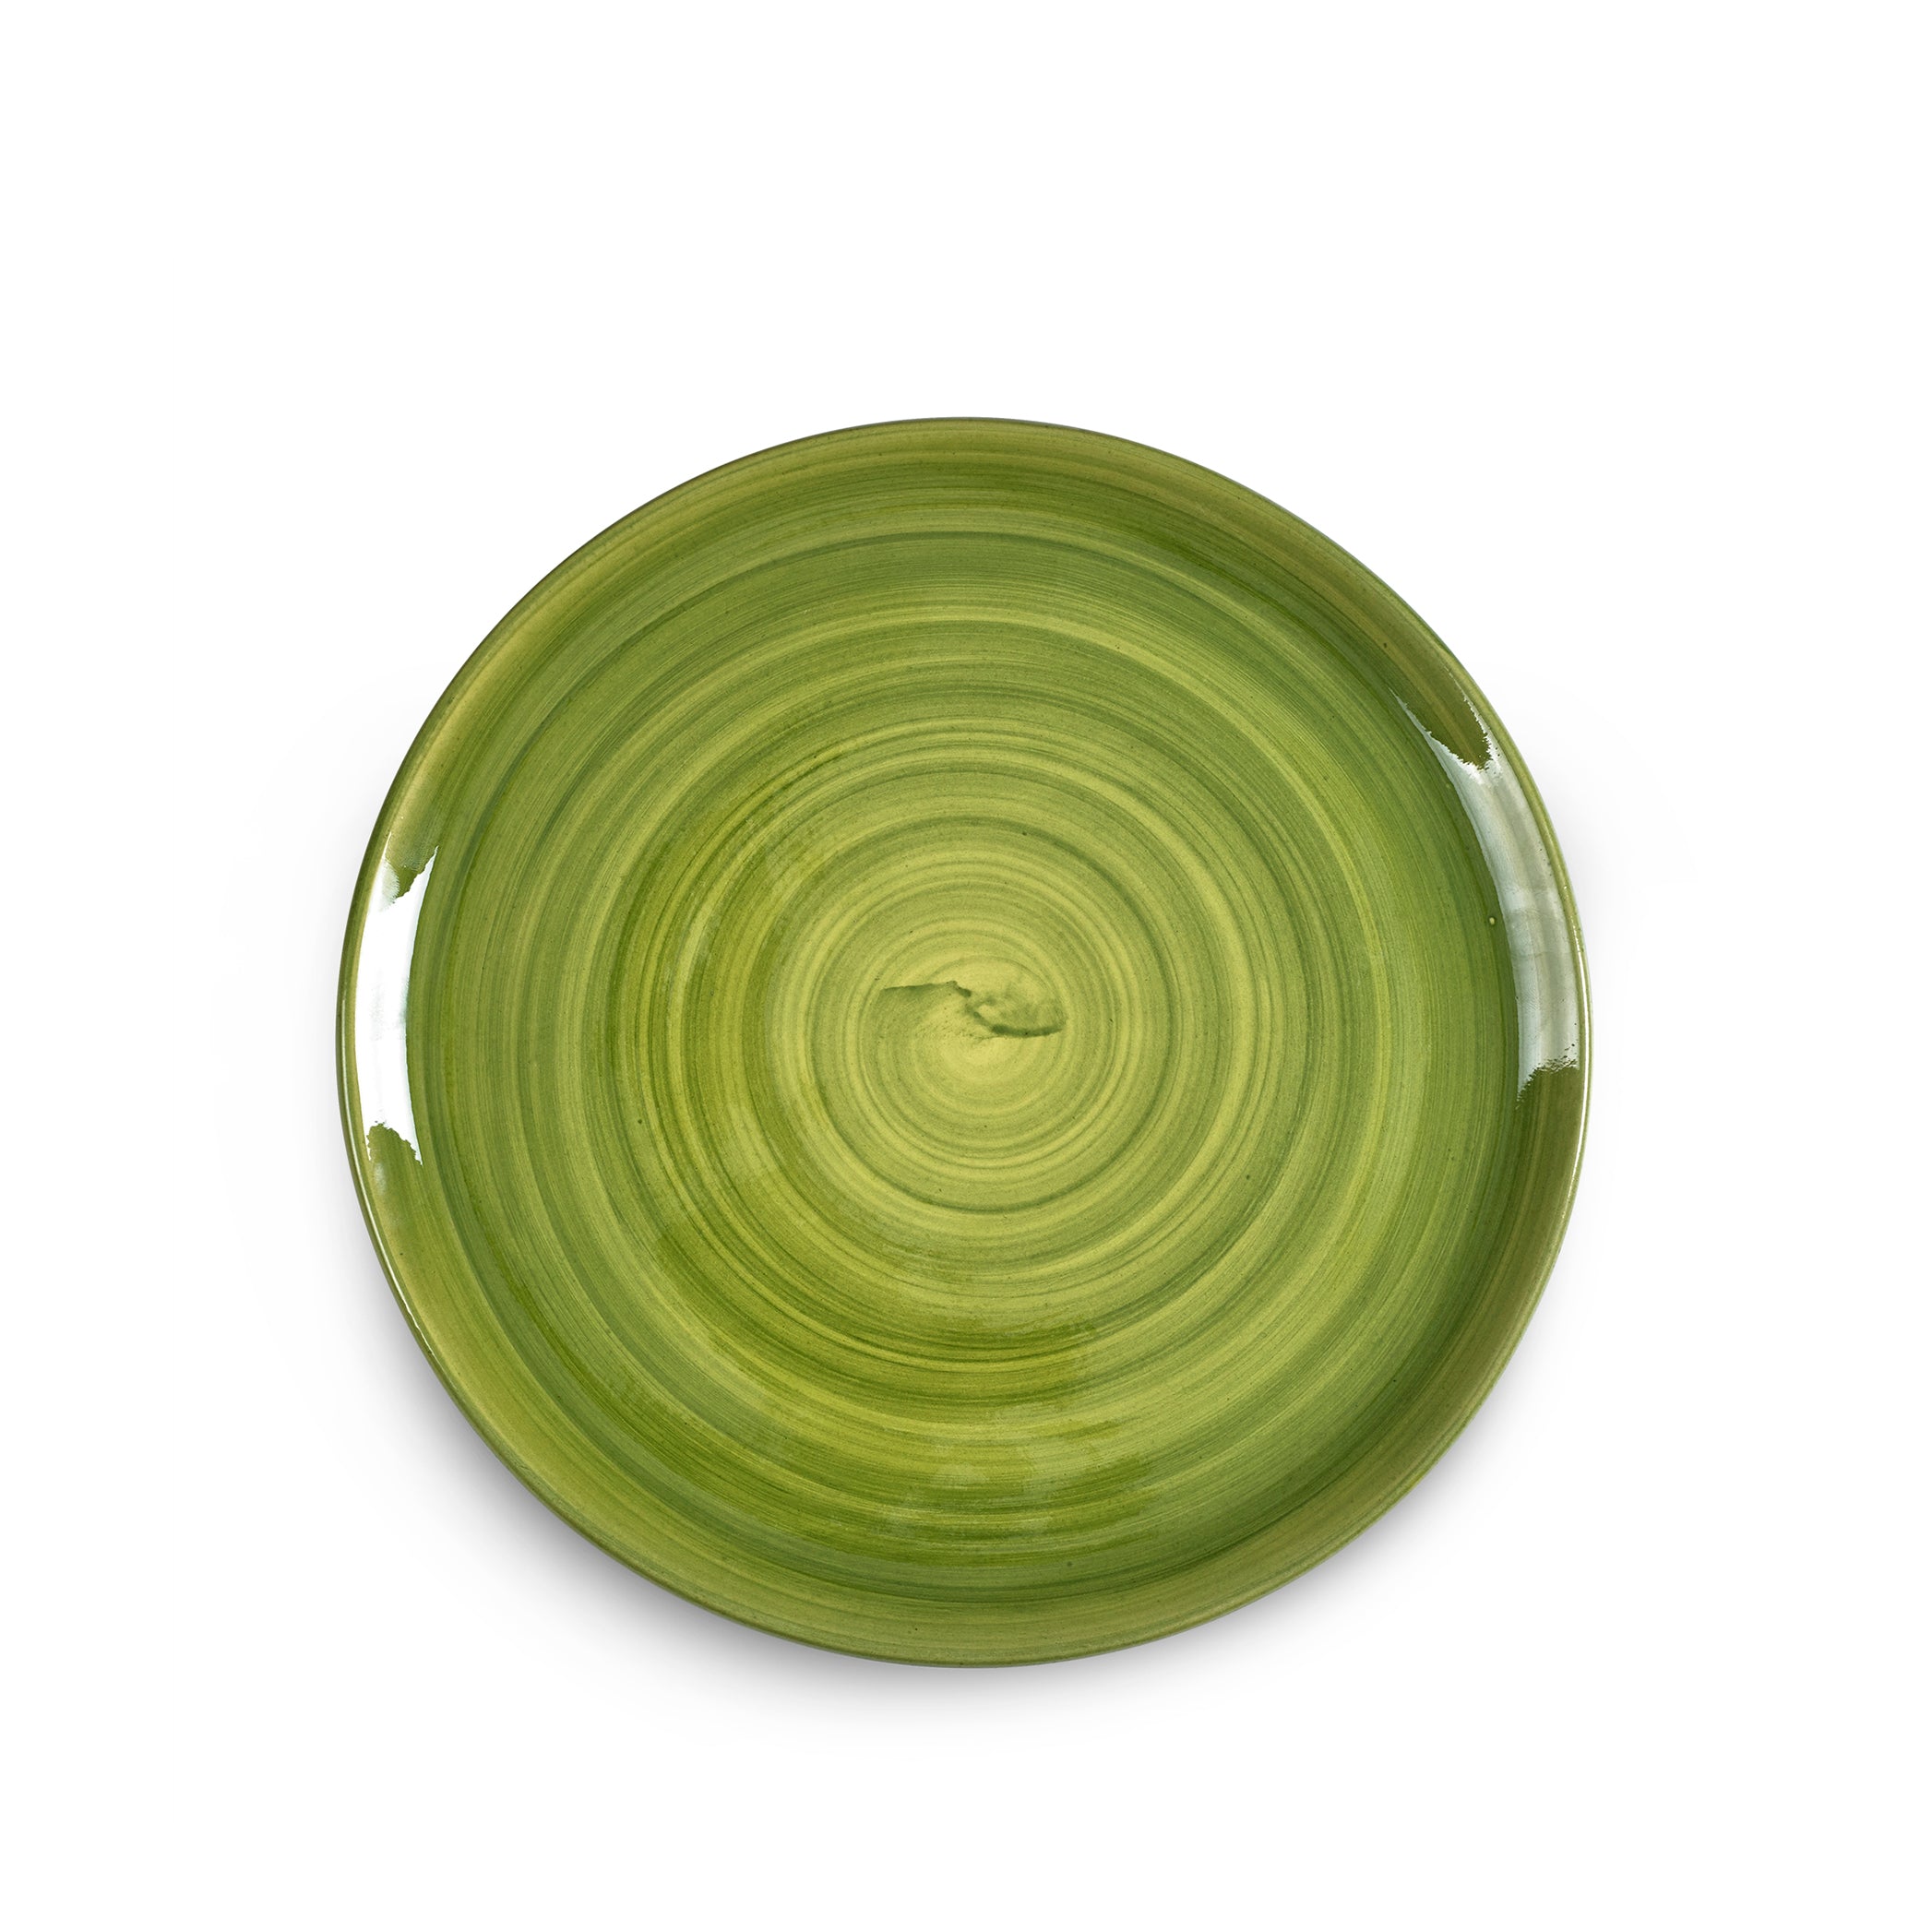 S&B "La Couronne" 29cm Ceramic Tart / Cake Plate in Green